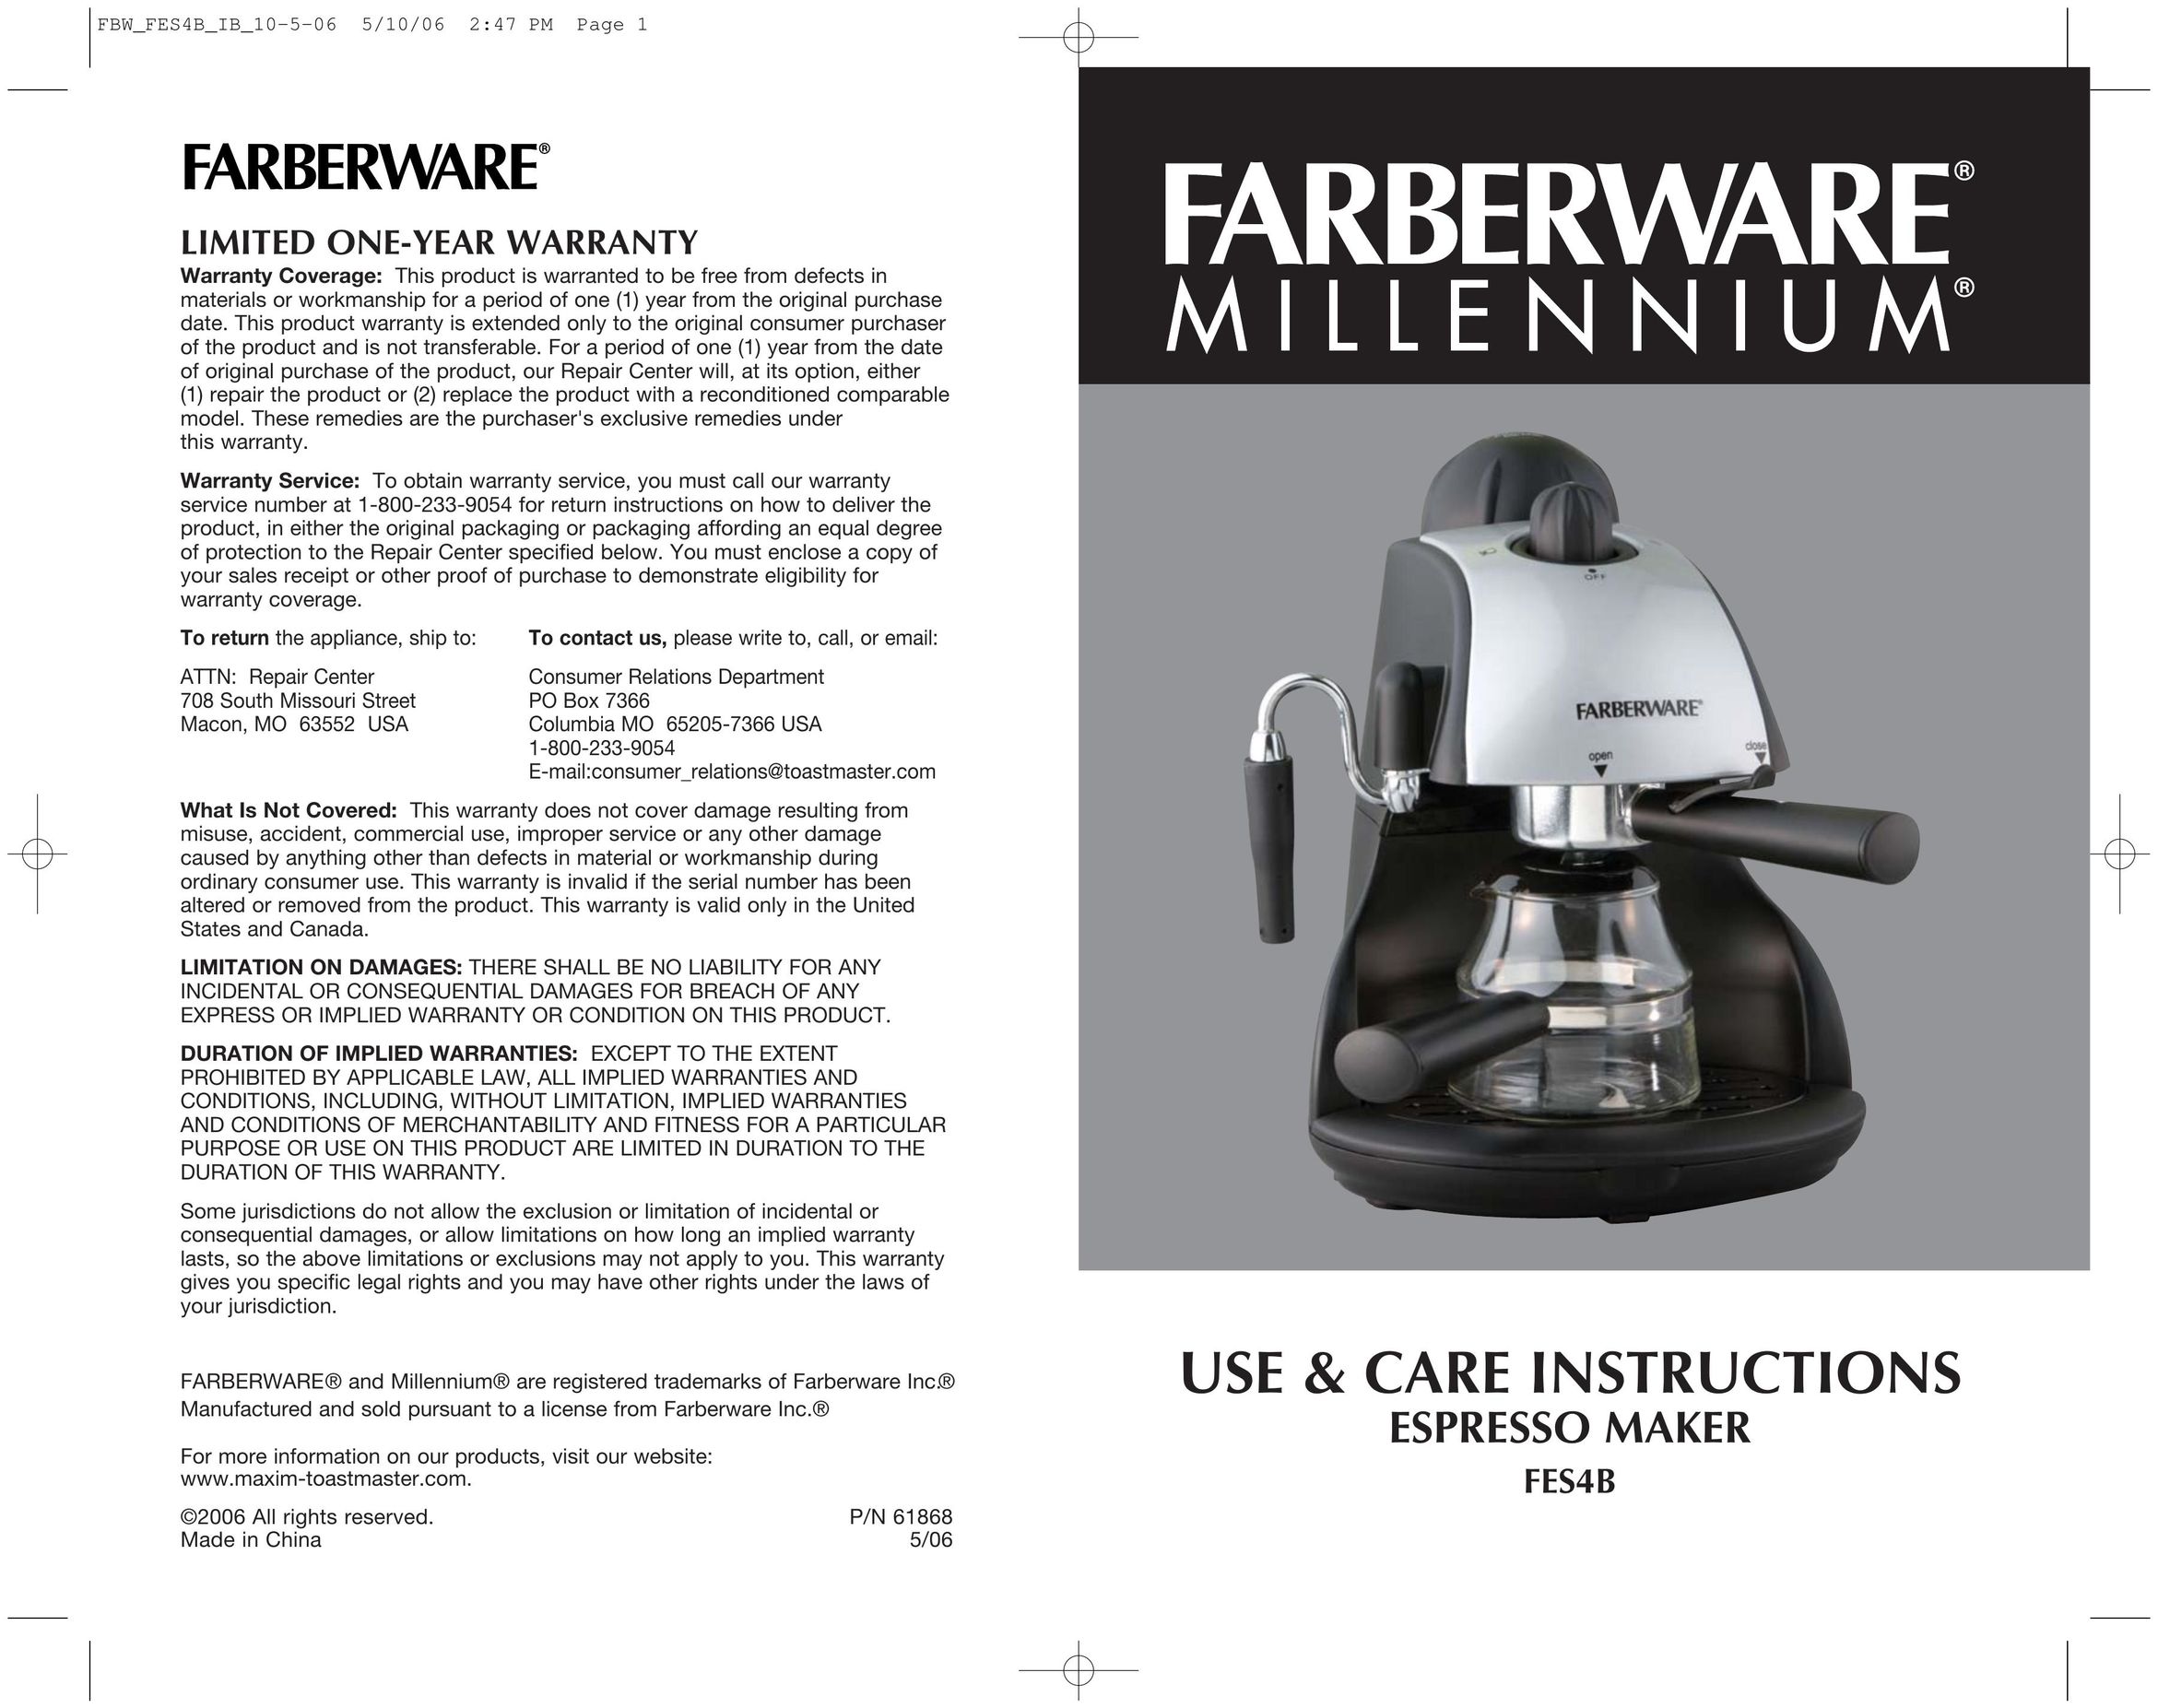 Toastmaster FES4B Espresso Maker User Manual